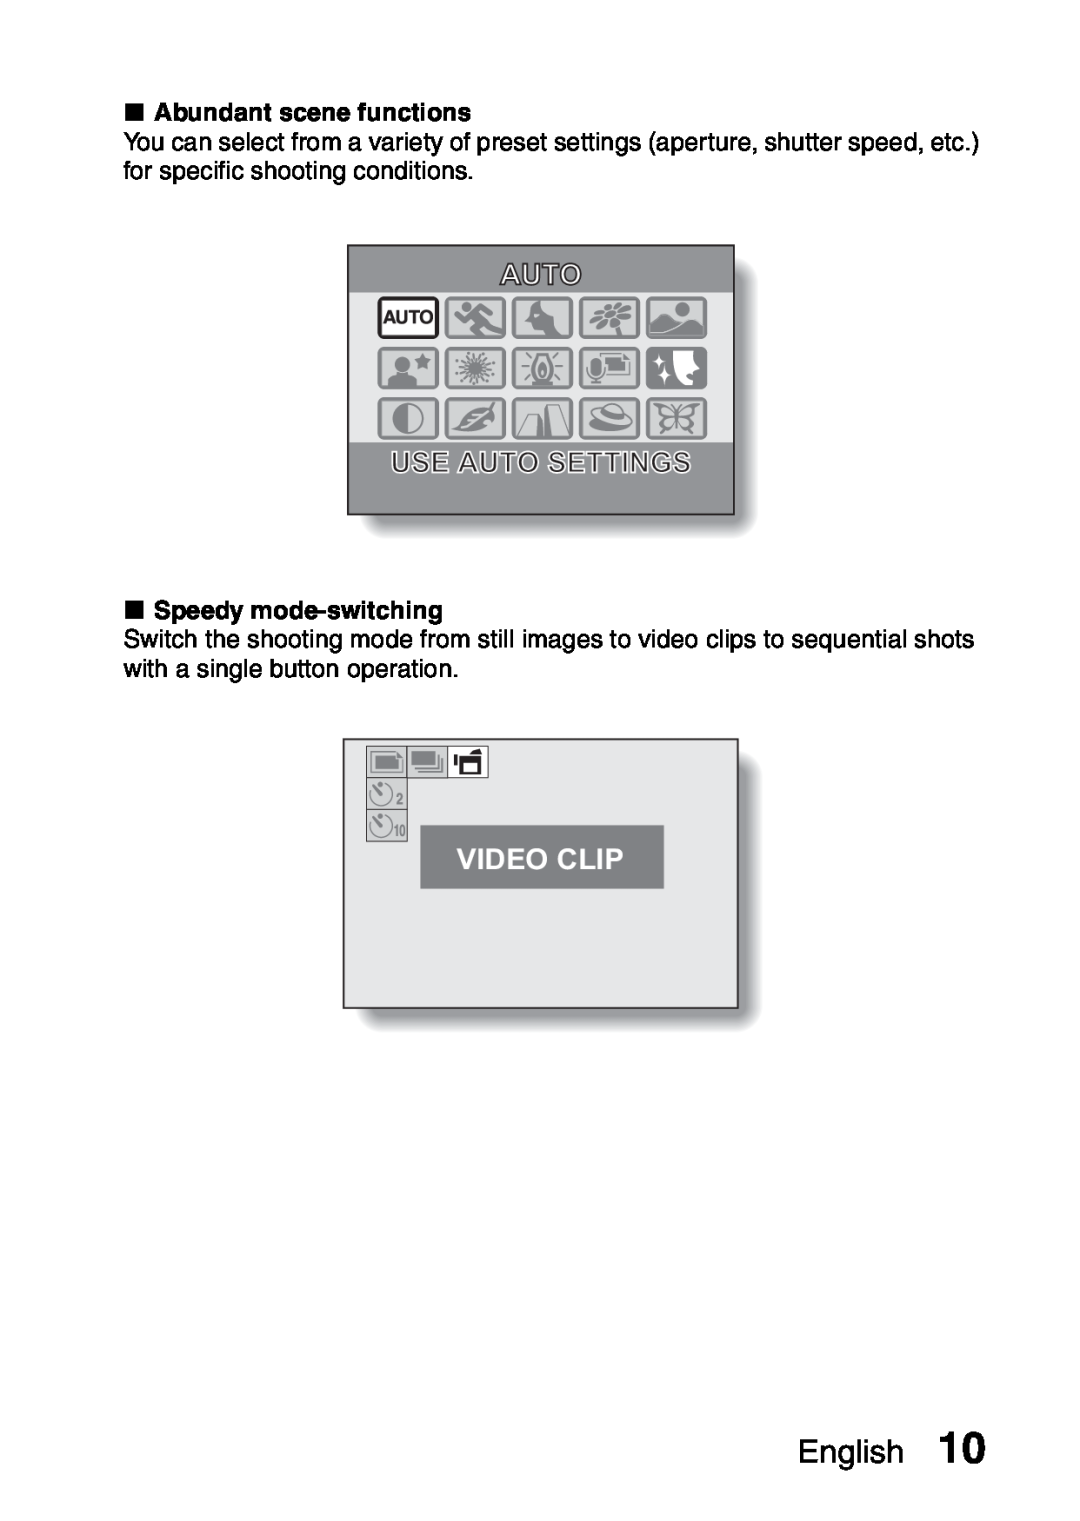 Sanyo VPC-S60 k Abundant scene functions, k Speedy mode-switching, English, Use Auto Settings, Video Clip 